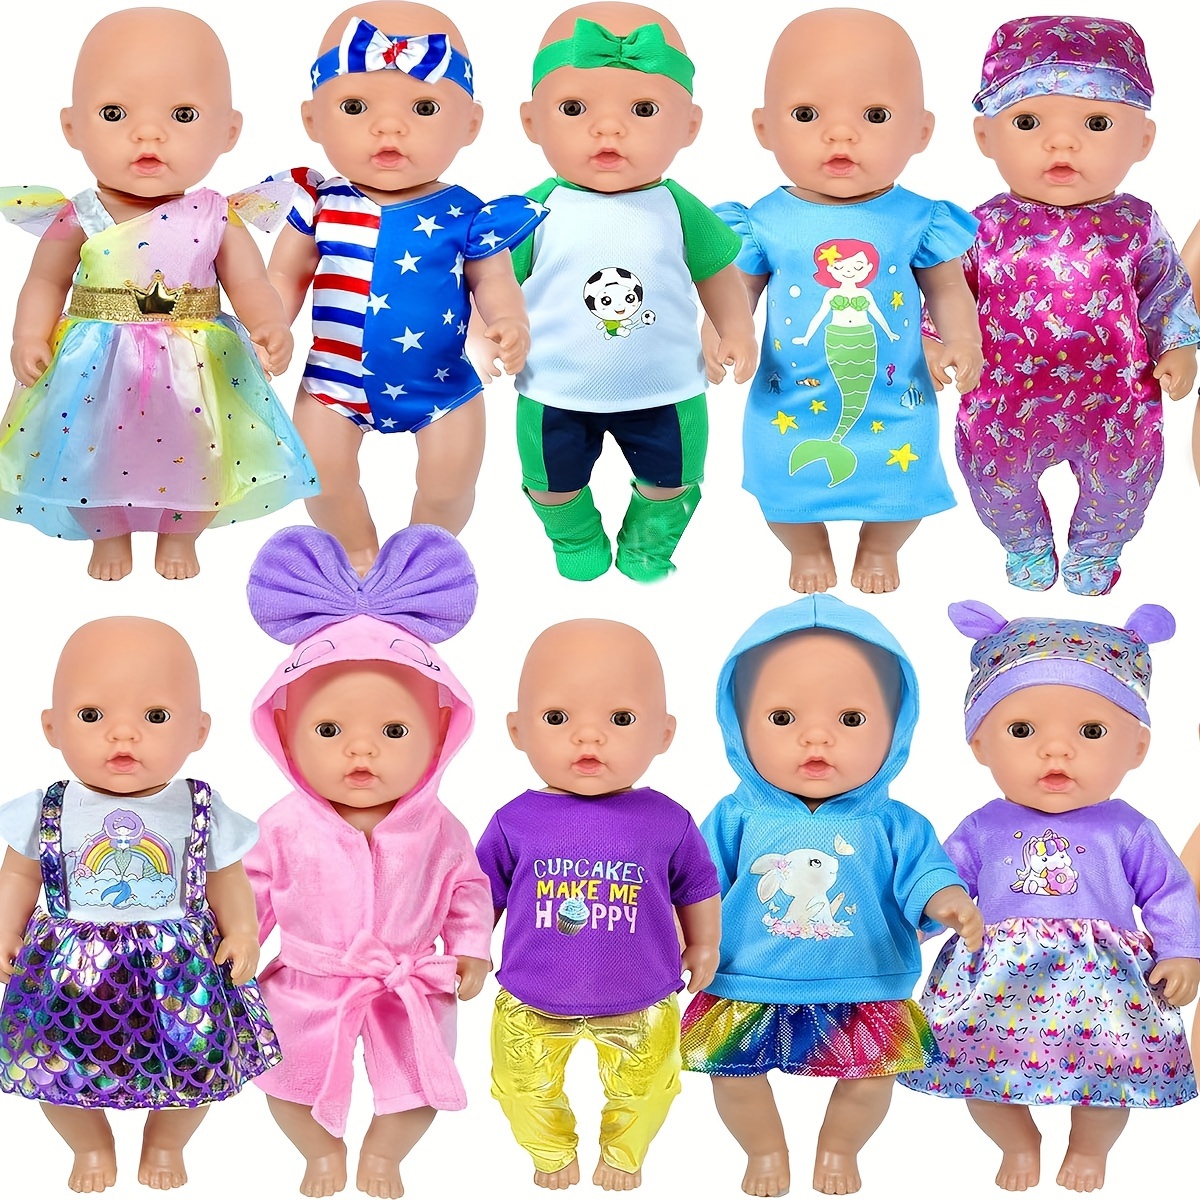 Baby Doll Closet, 18 Inch Doll Wardrobe